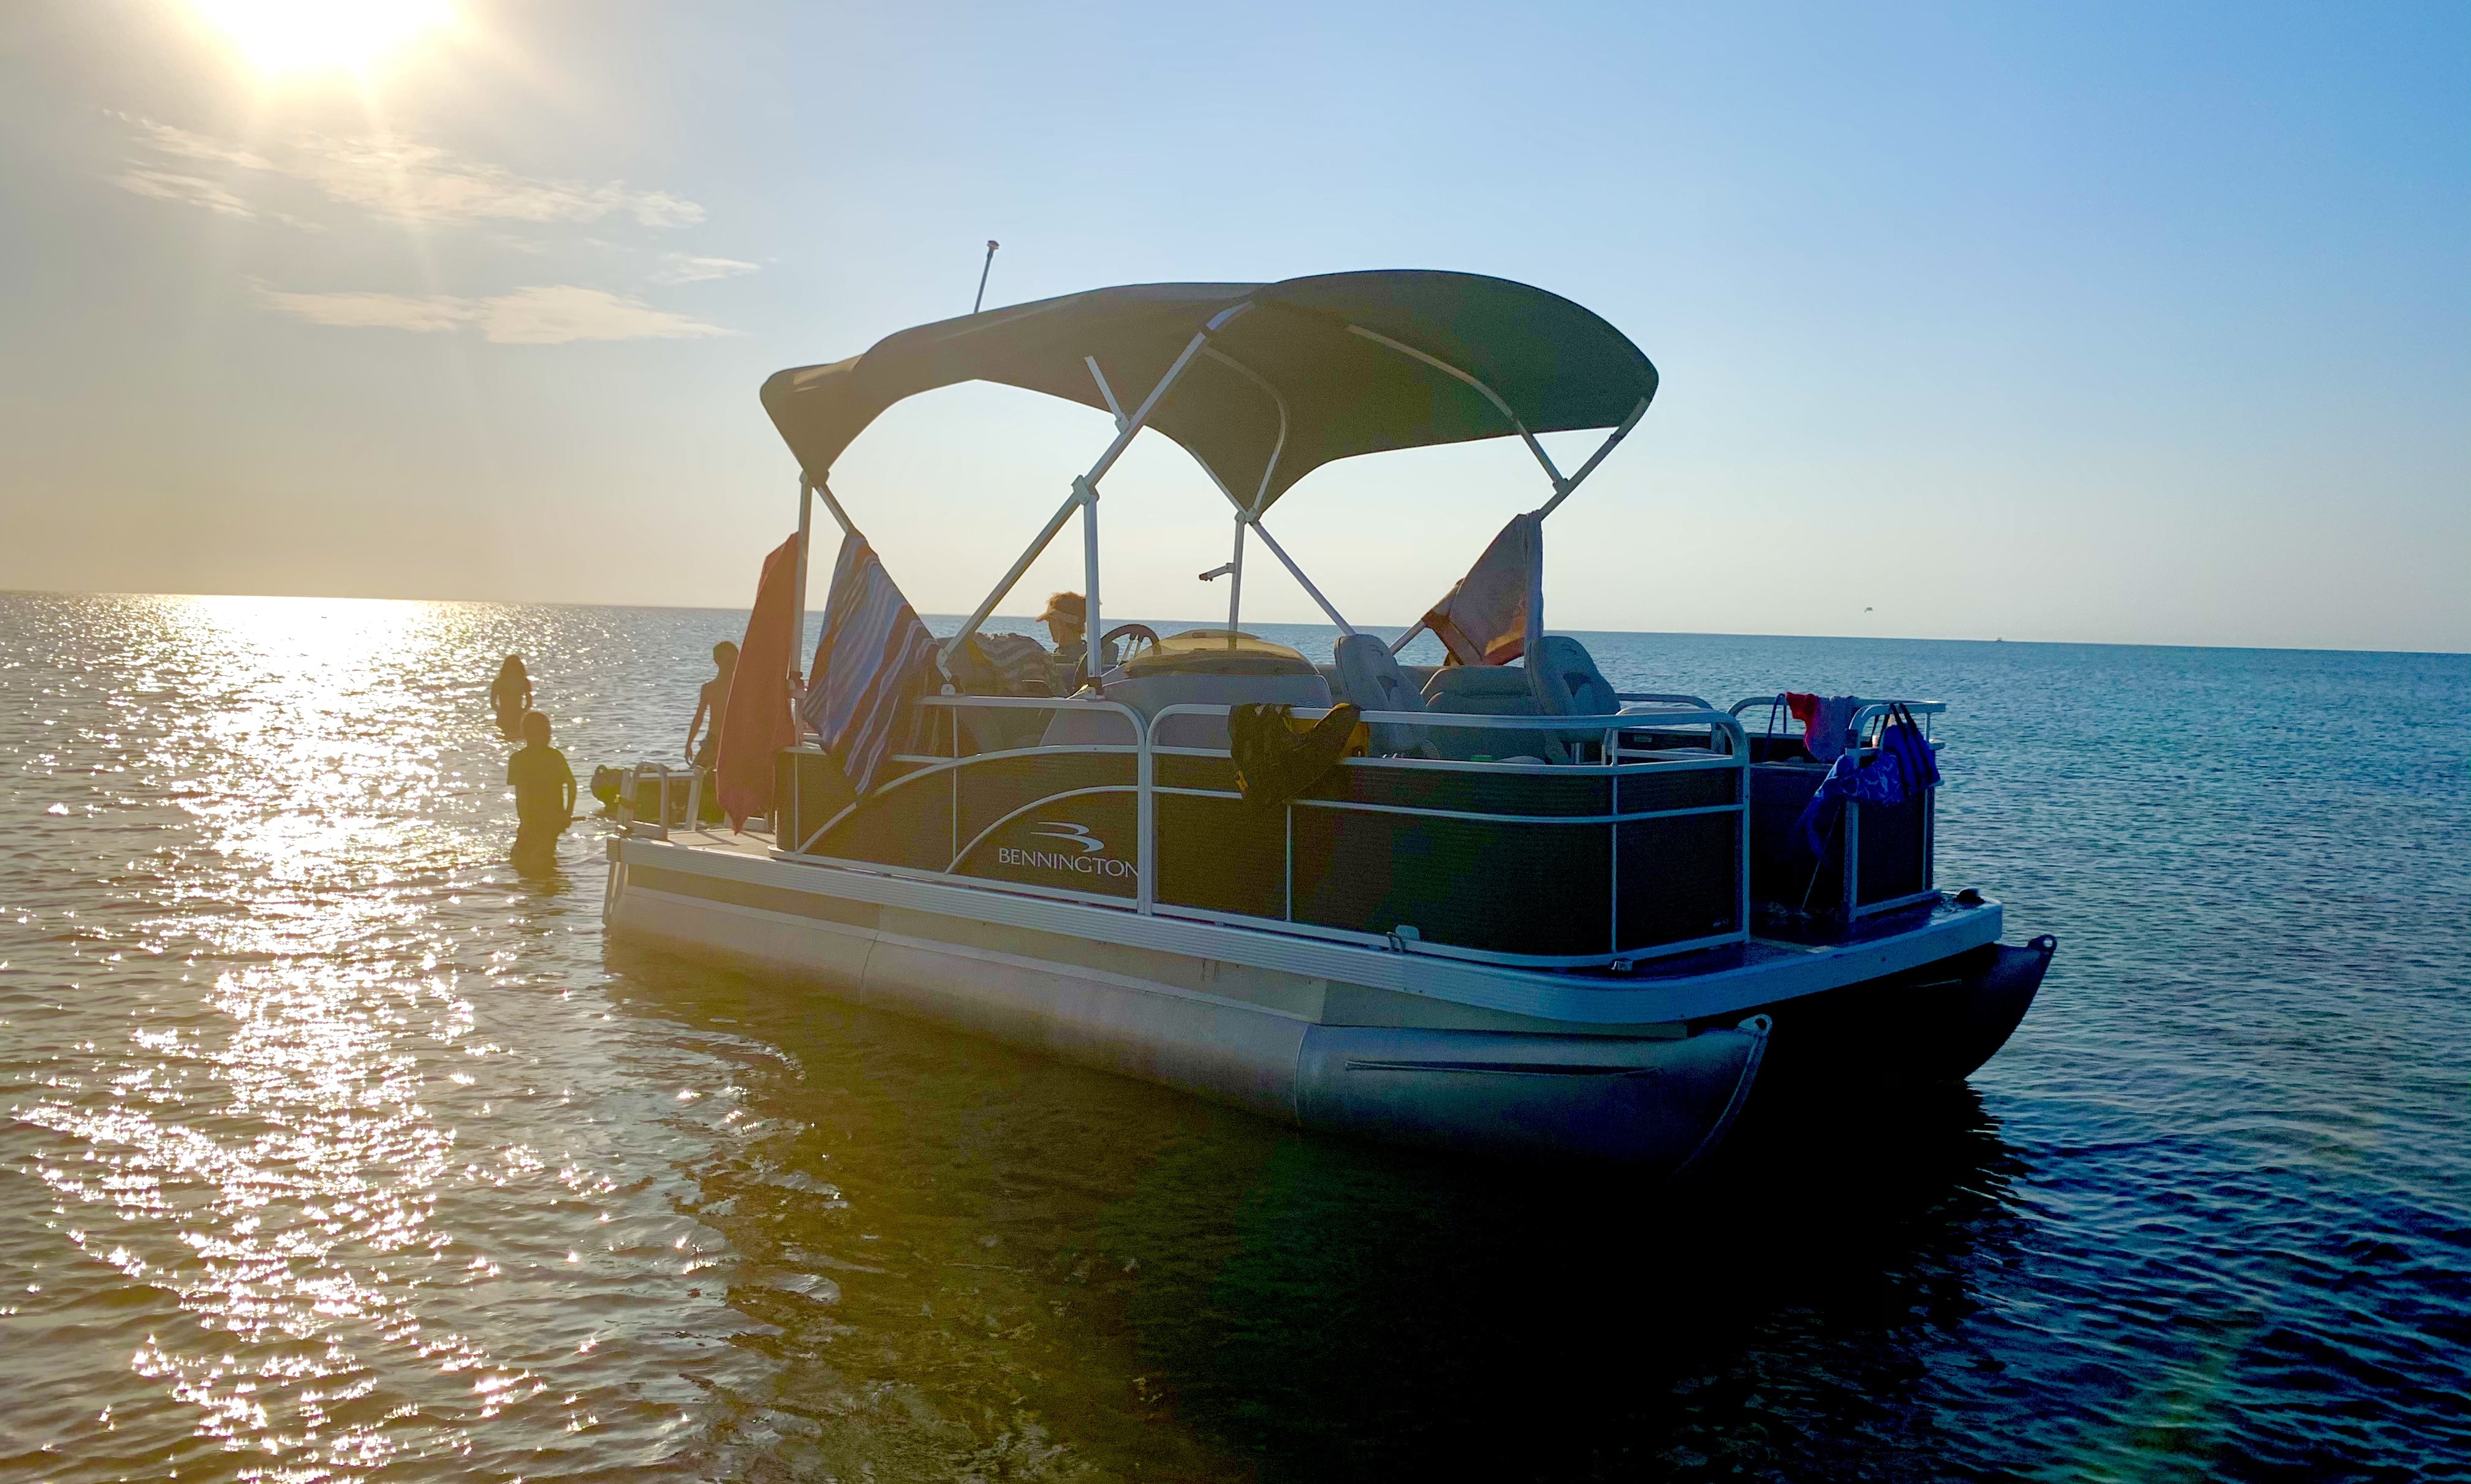 Bennington Pontoon Boat for Rent at South Padre Island! | GetMyBoat